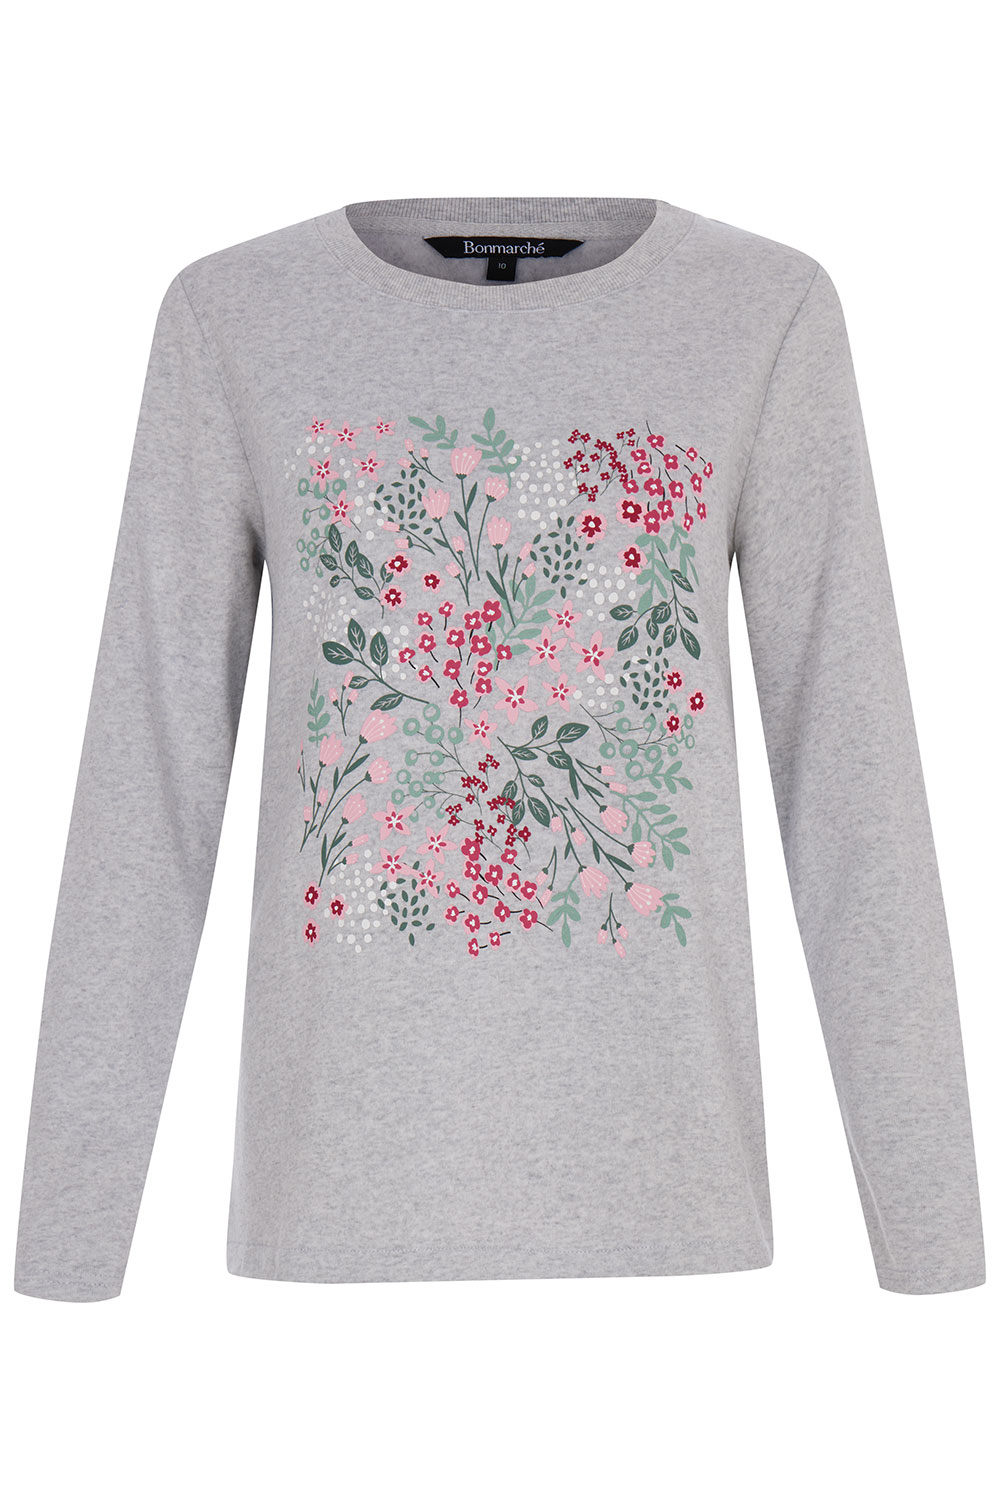 Long Sleeve Patchwork Ditsy Floral Print Sweatshirt | Bonmarché